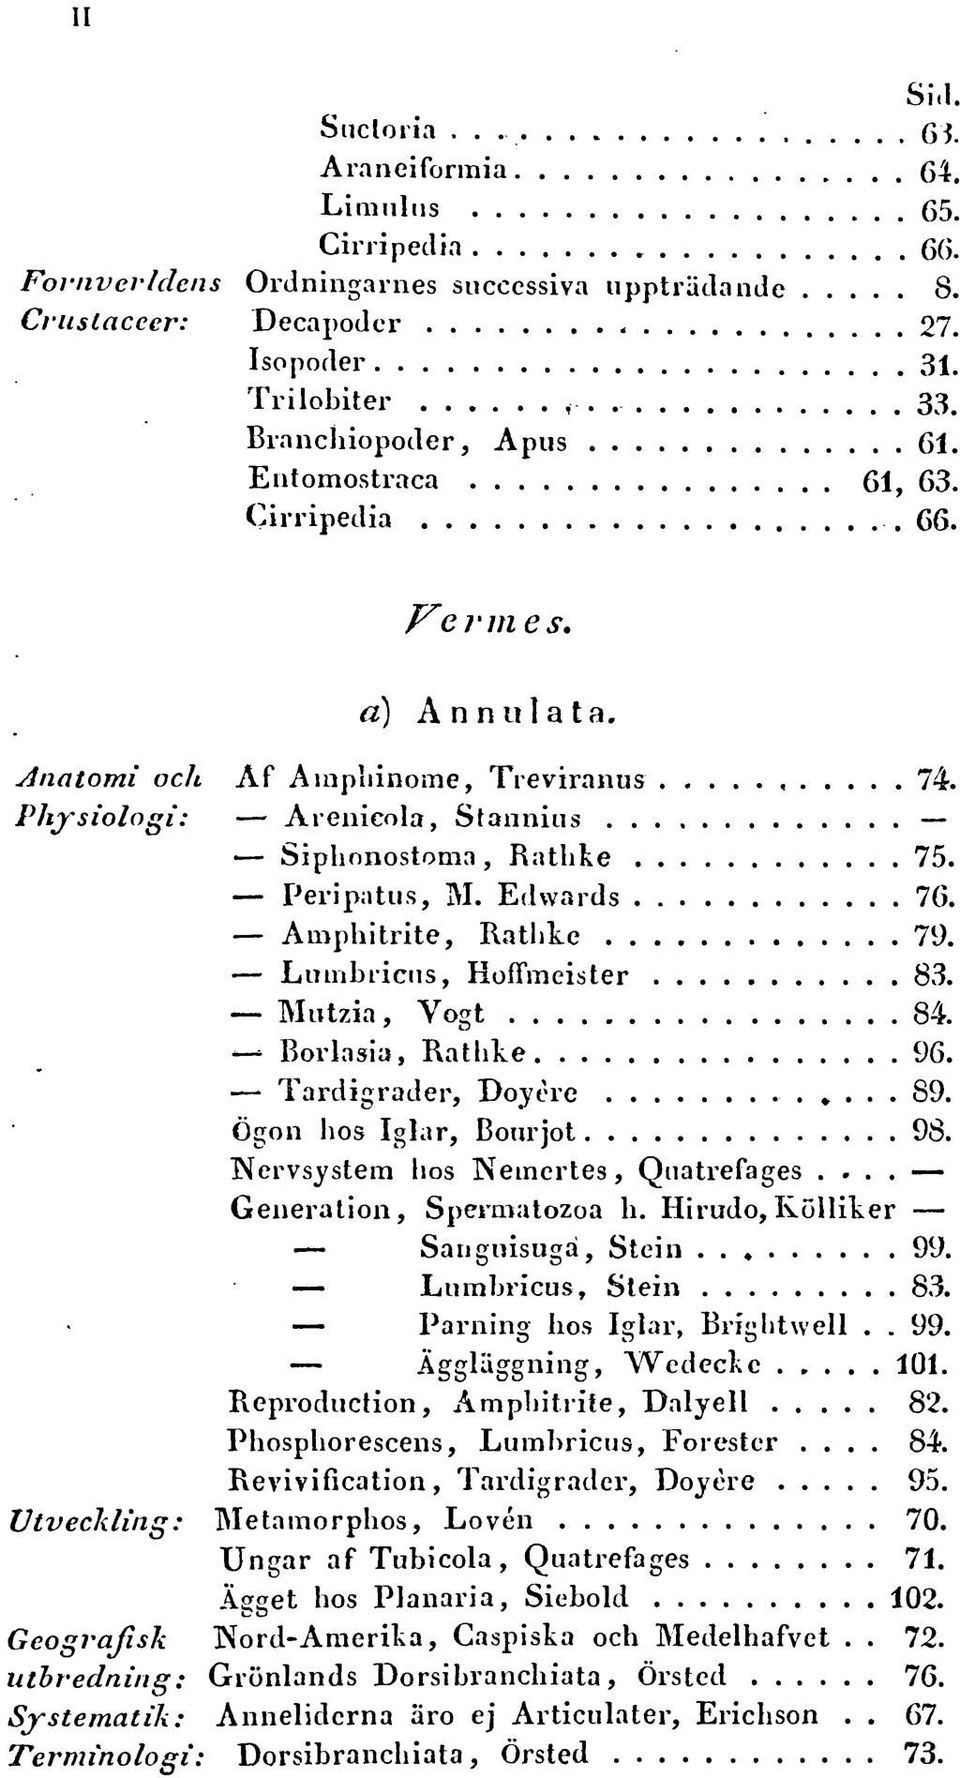 Peripntus, ]V1. Edwards 76. Amphitrite, Rathtc 79. Lmnbricus, Hoffmeister 83. Mutzia, Yogt 84. Borlasia, Rathke 96. Tardigrader, Doyere... 89. Ogon hos Iglar, Bourjot 98.